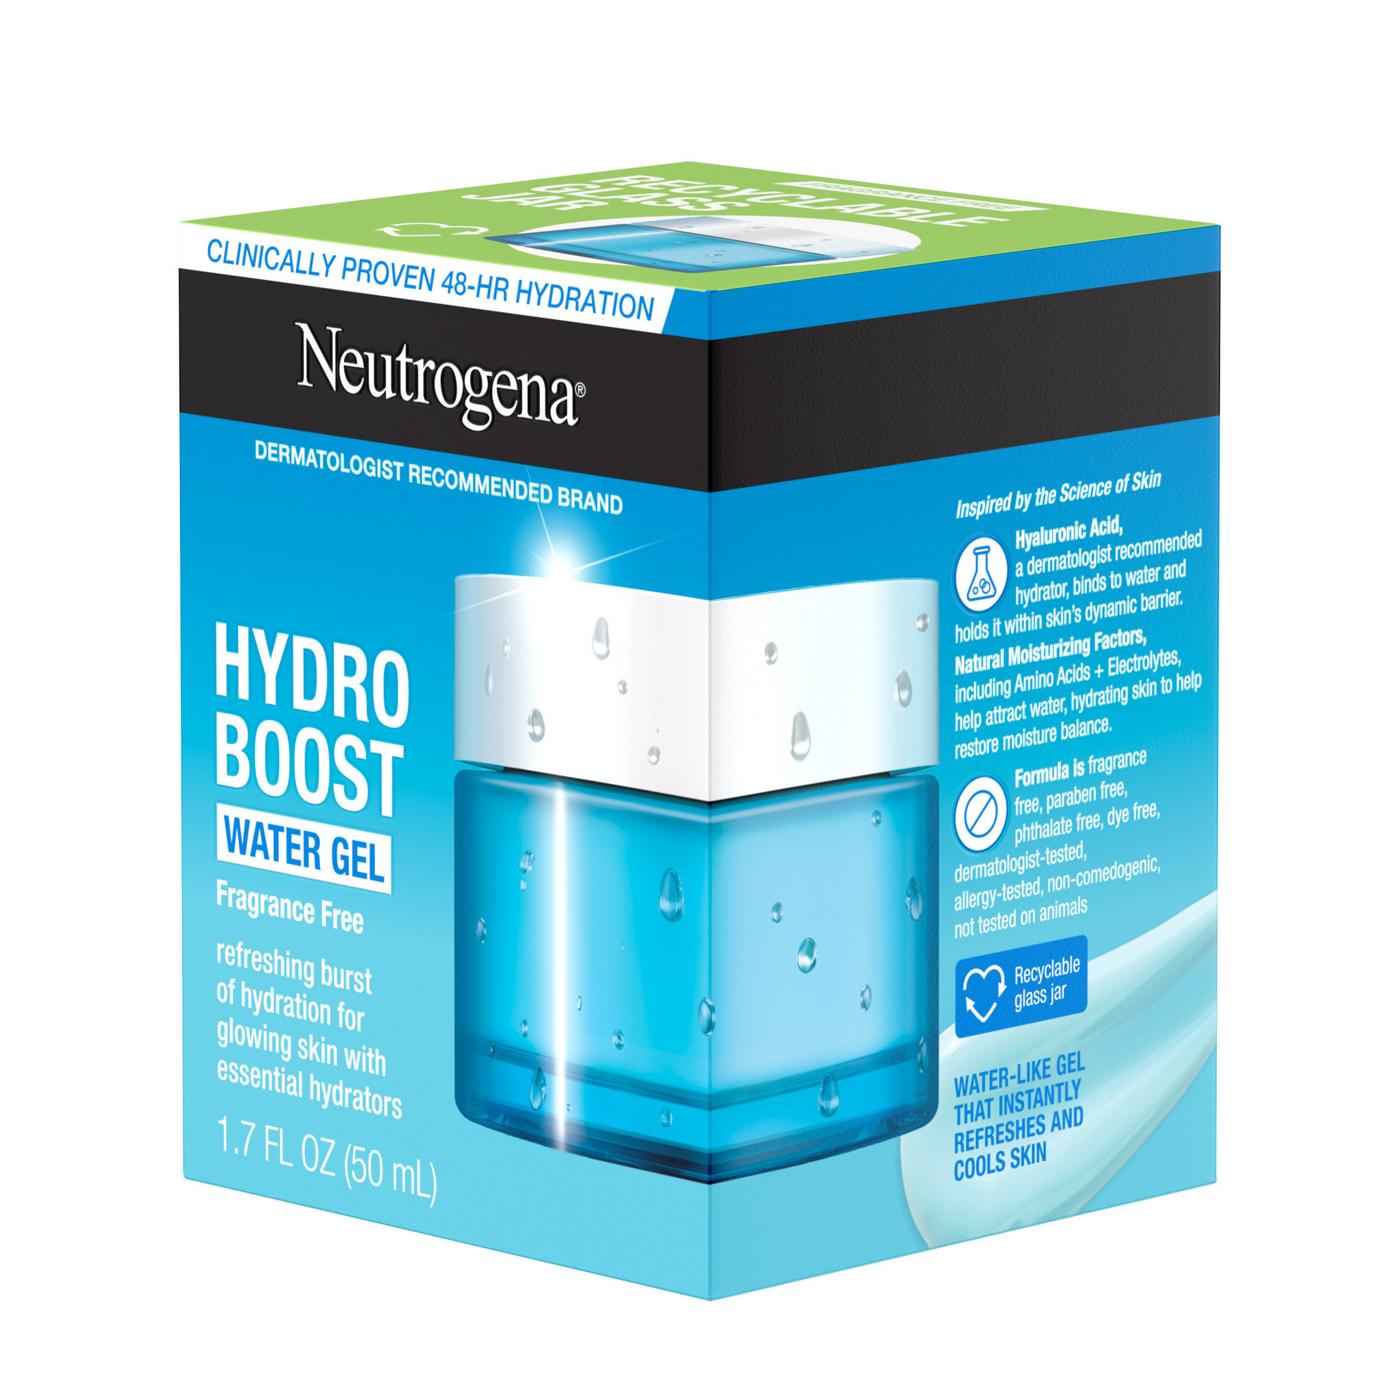 Neutrogena Hydro Boost Water Gel; image 8 of 8